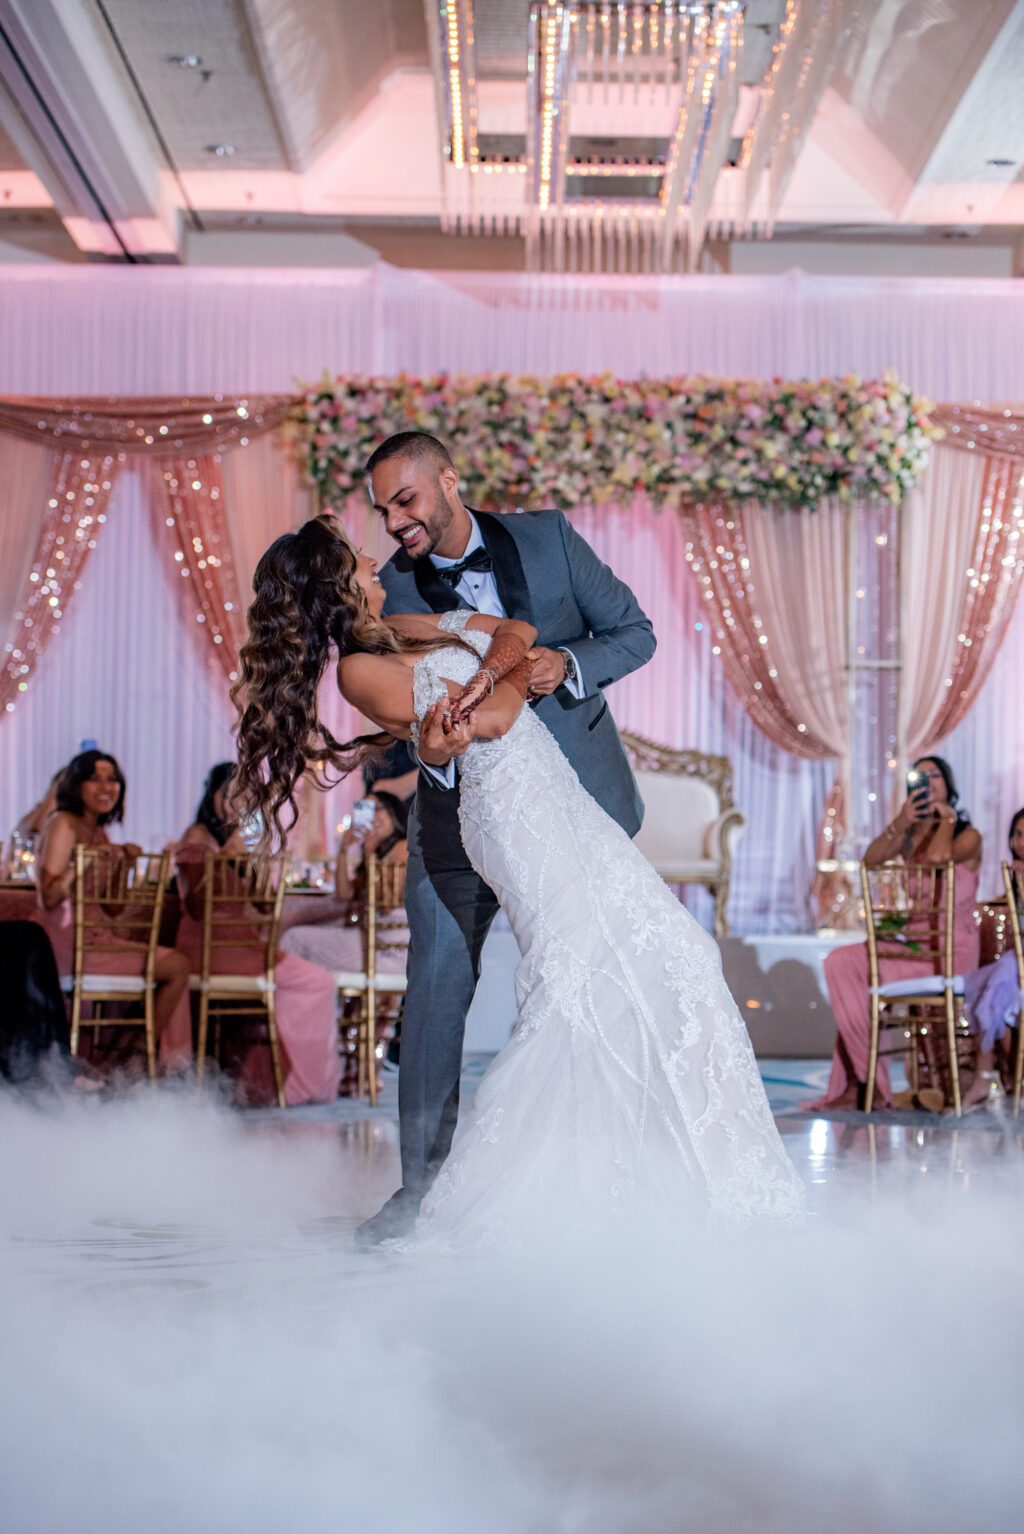 Romantic First Dance on Cloud, Ballroom Reception | Tampa Bay Wedding Venue Hilton Downtown Tampa